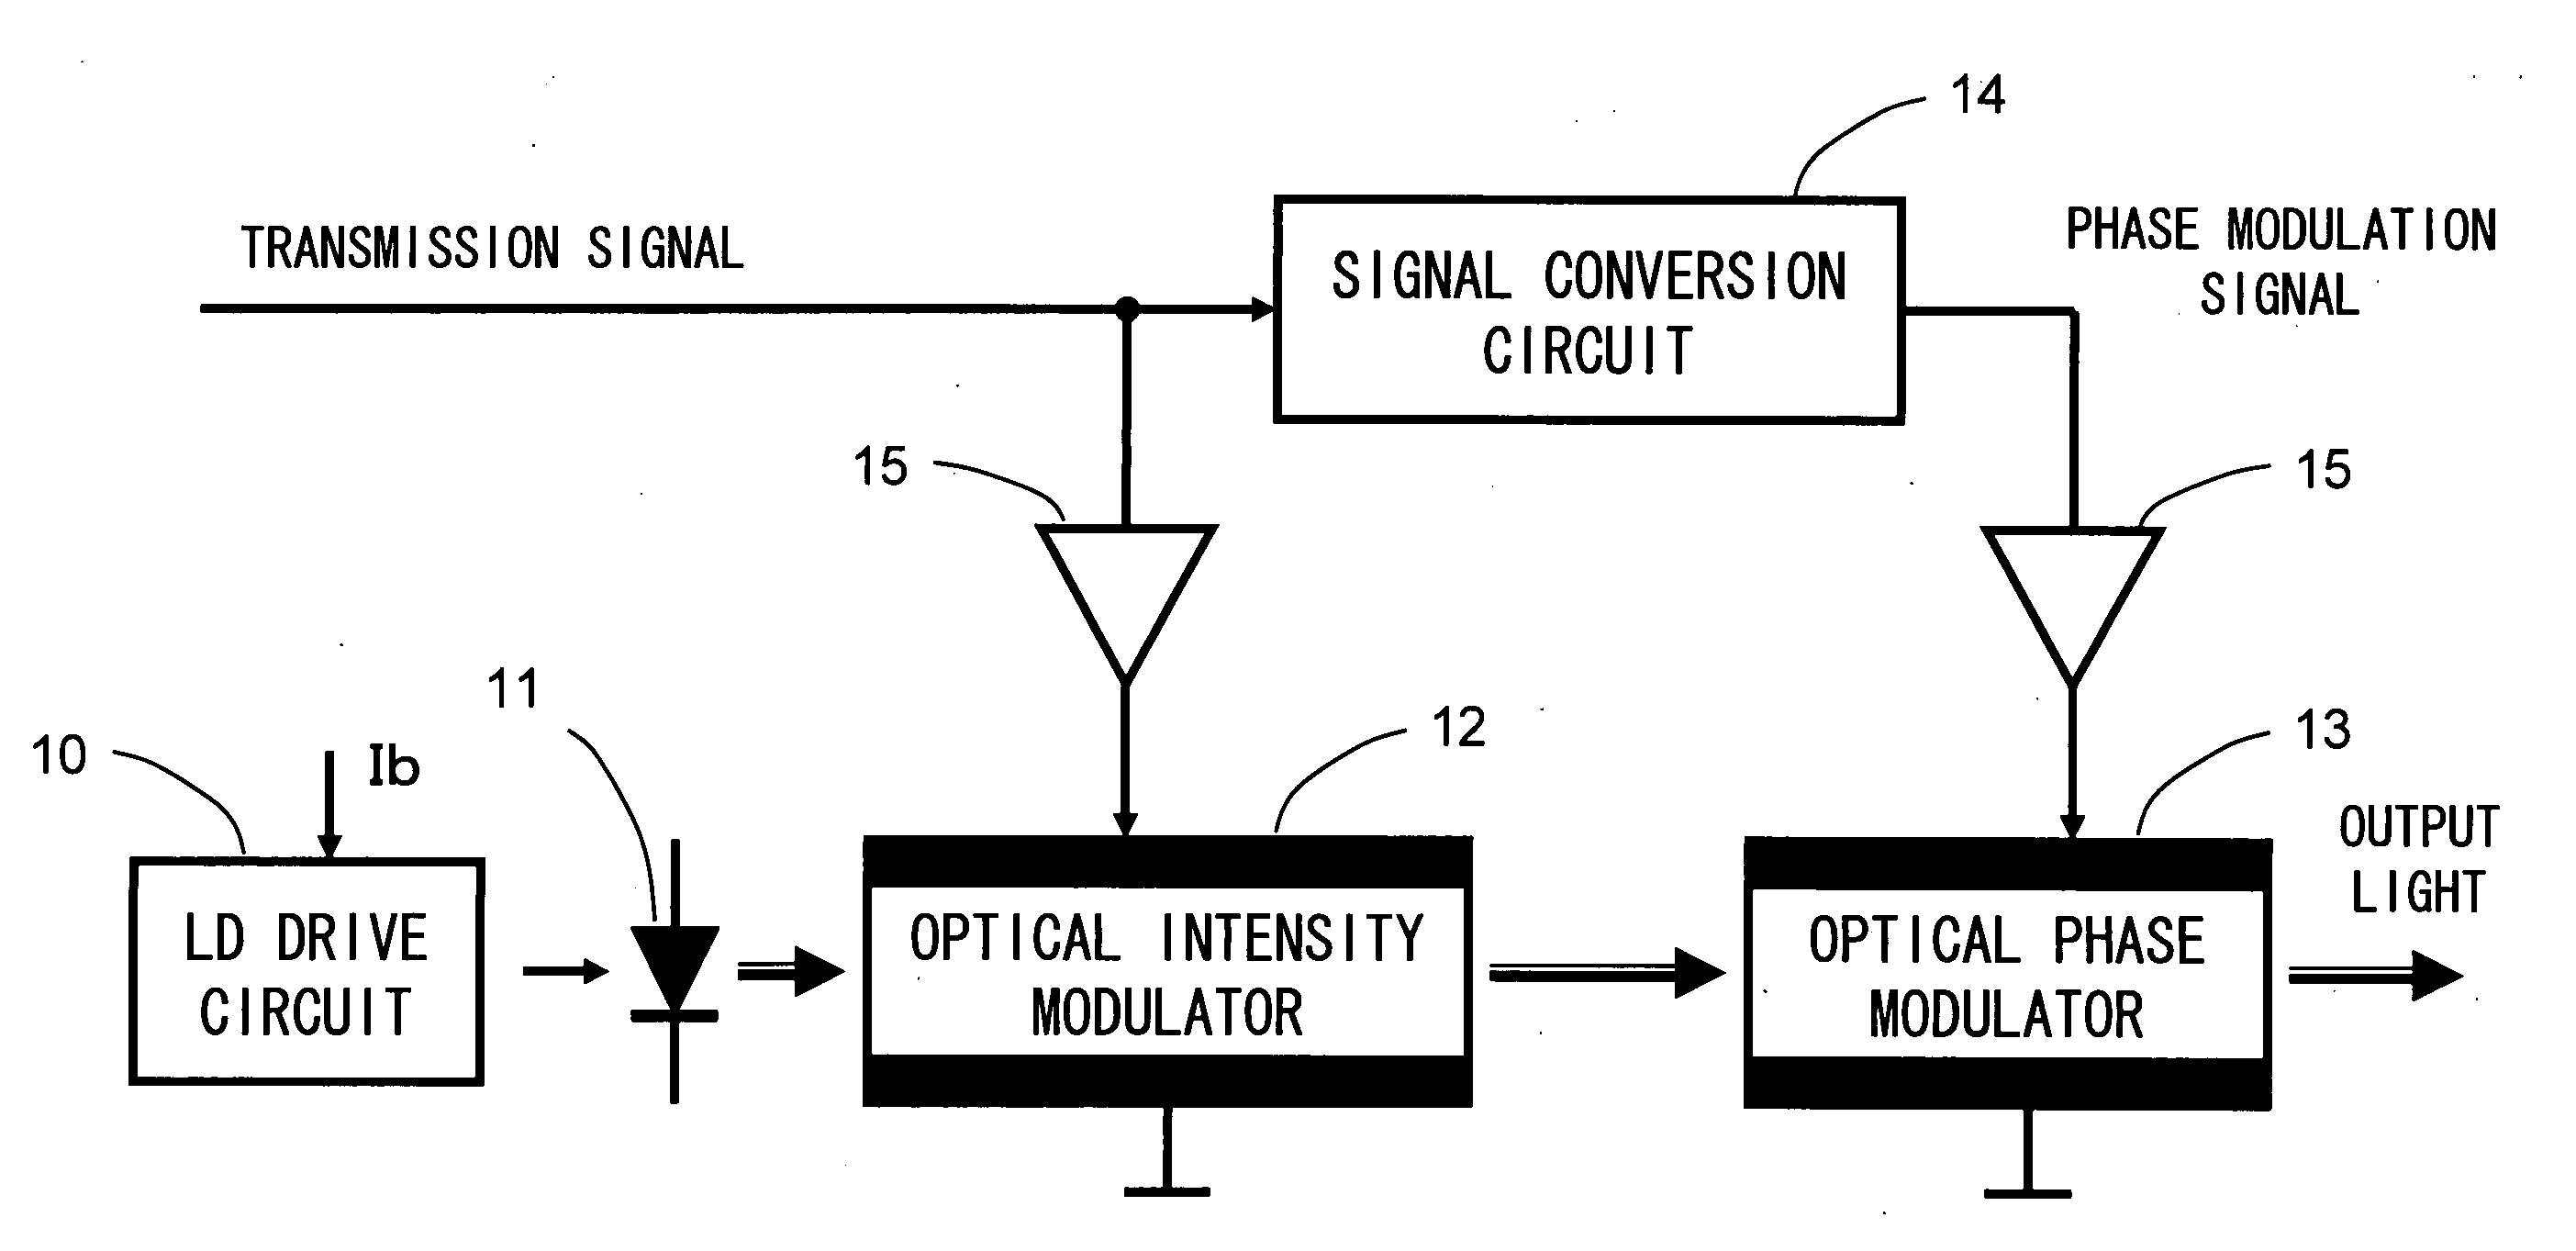 Optical transmission device and optical phase modulator